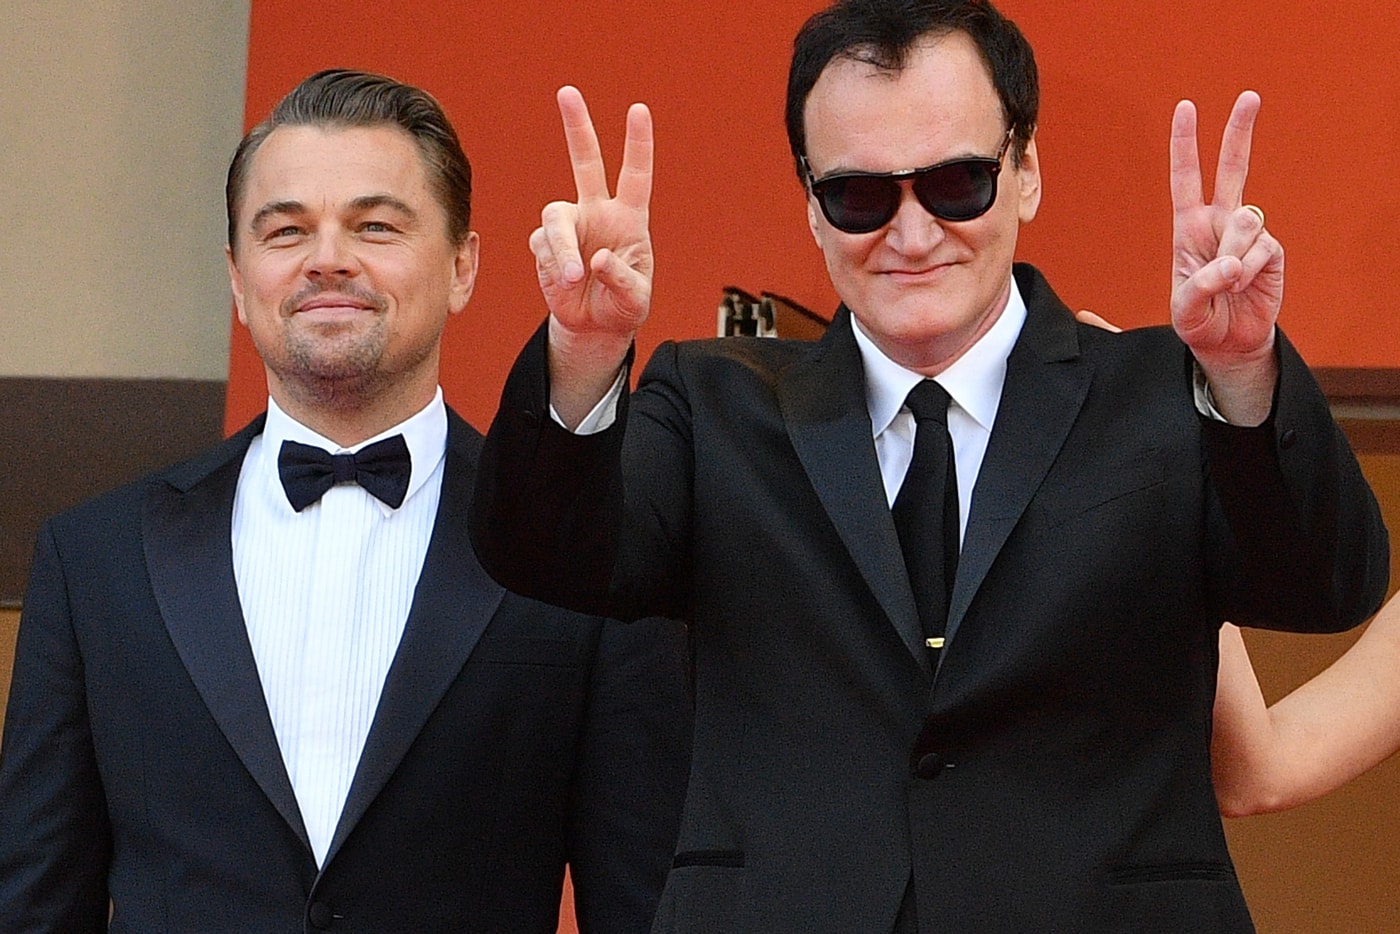 Leonardo DiCaprio Star Quentin Tarantino Film Django Unchained Charles Manson 1969 50th Anniversary